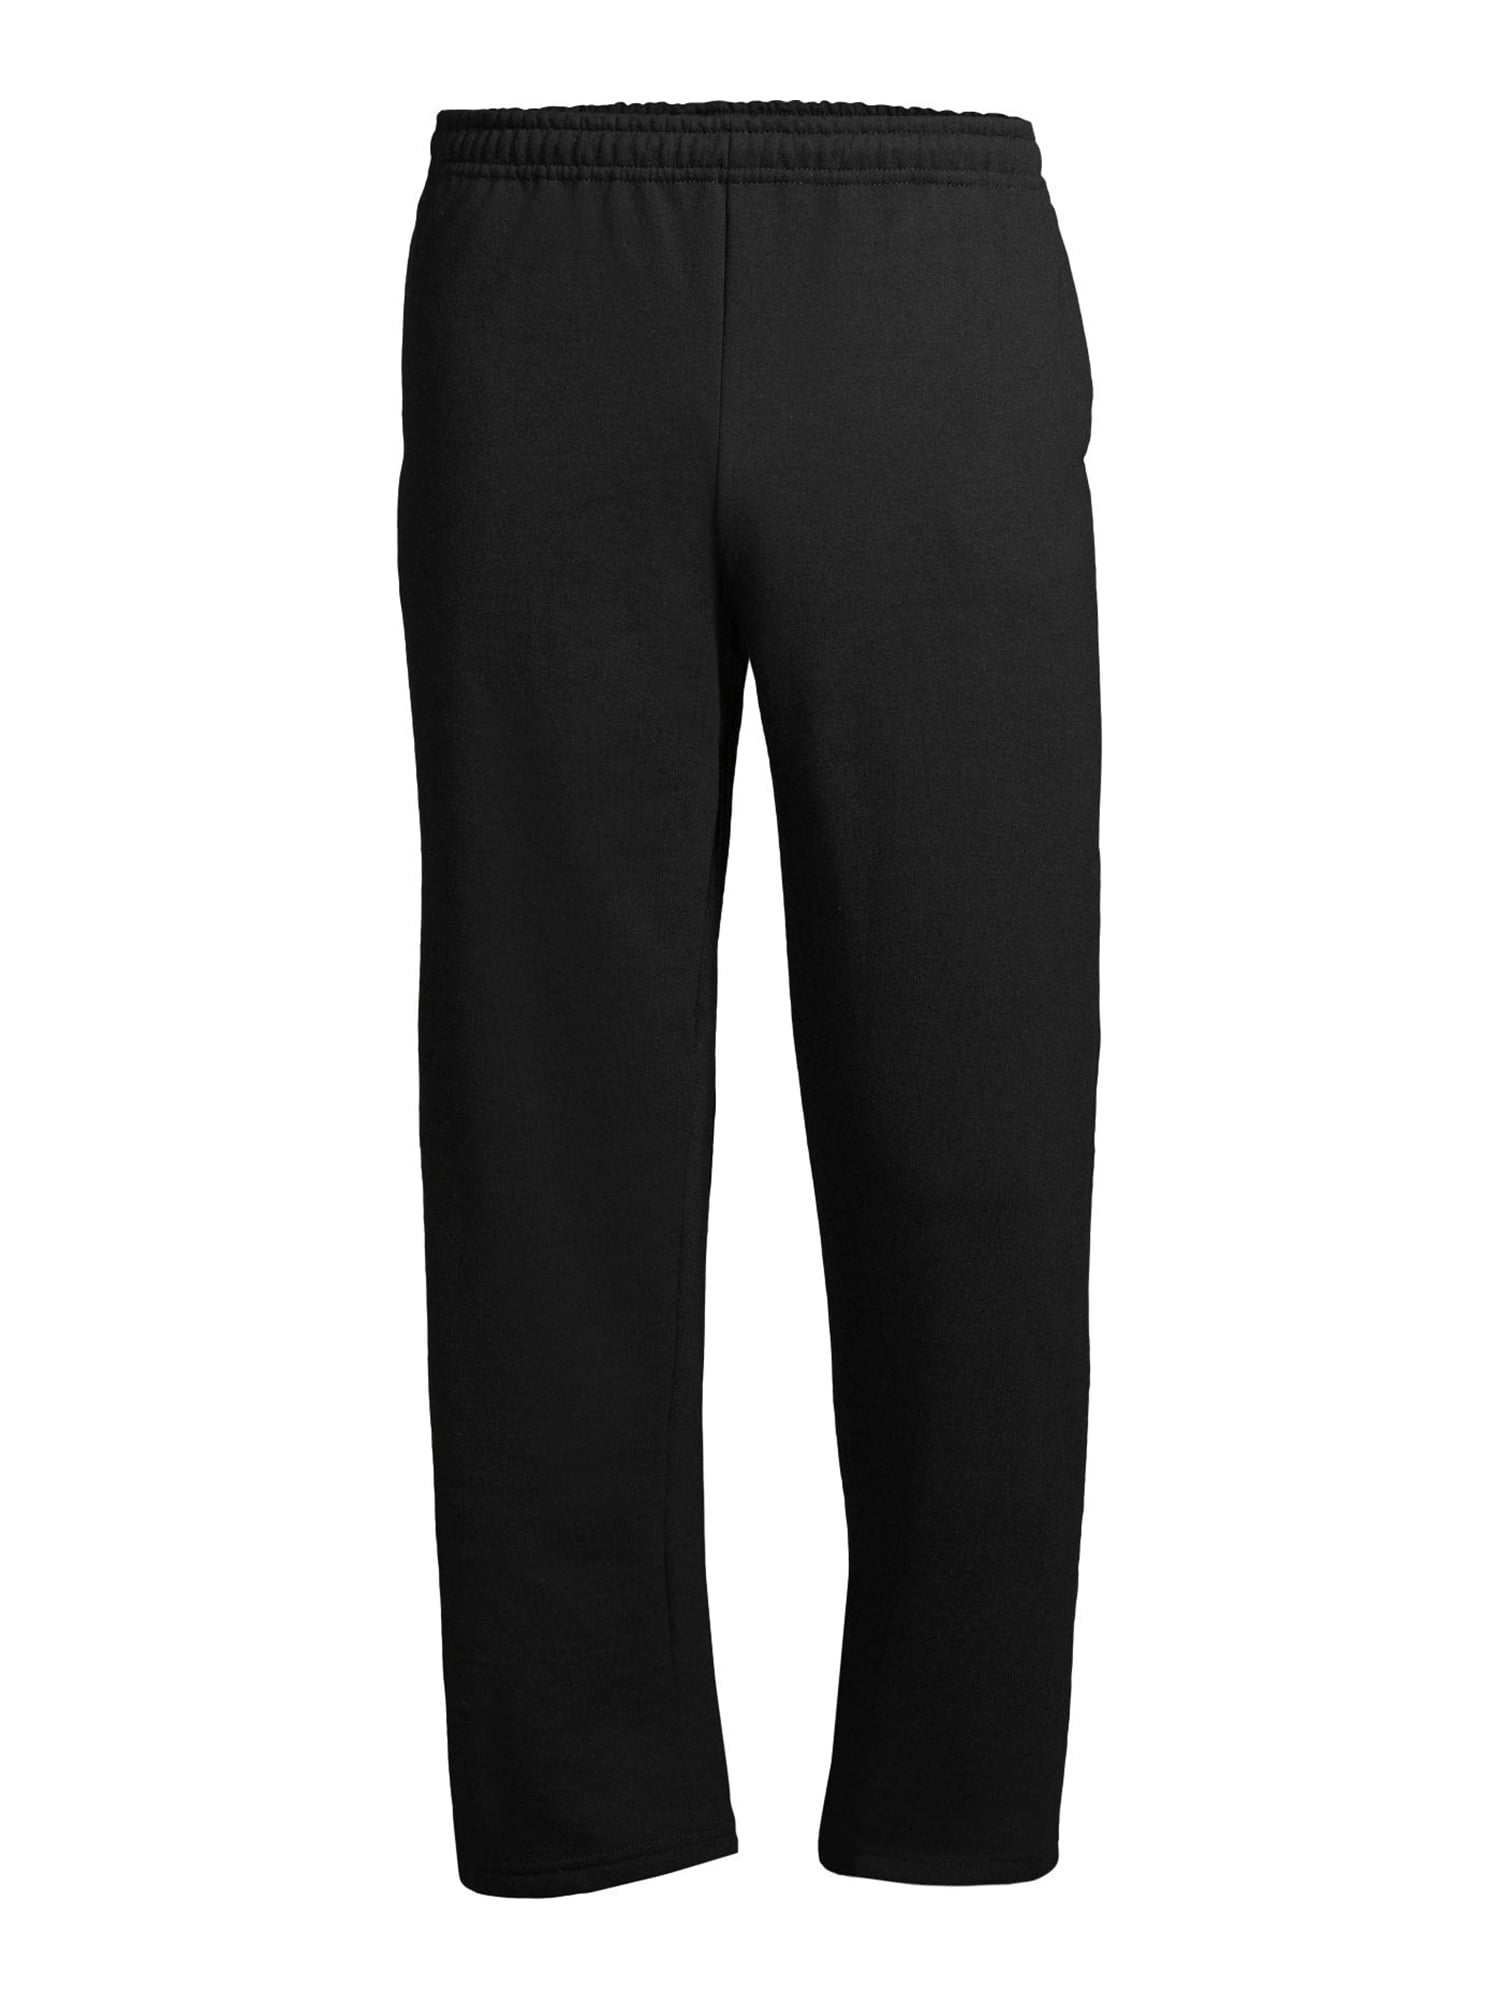 Gildan - Heavy Blend Sweatpants - 18200 - Black - Size: L